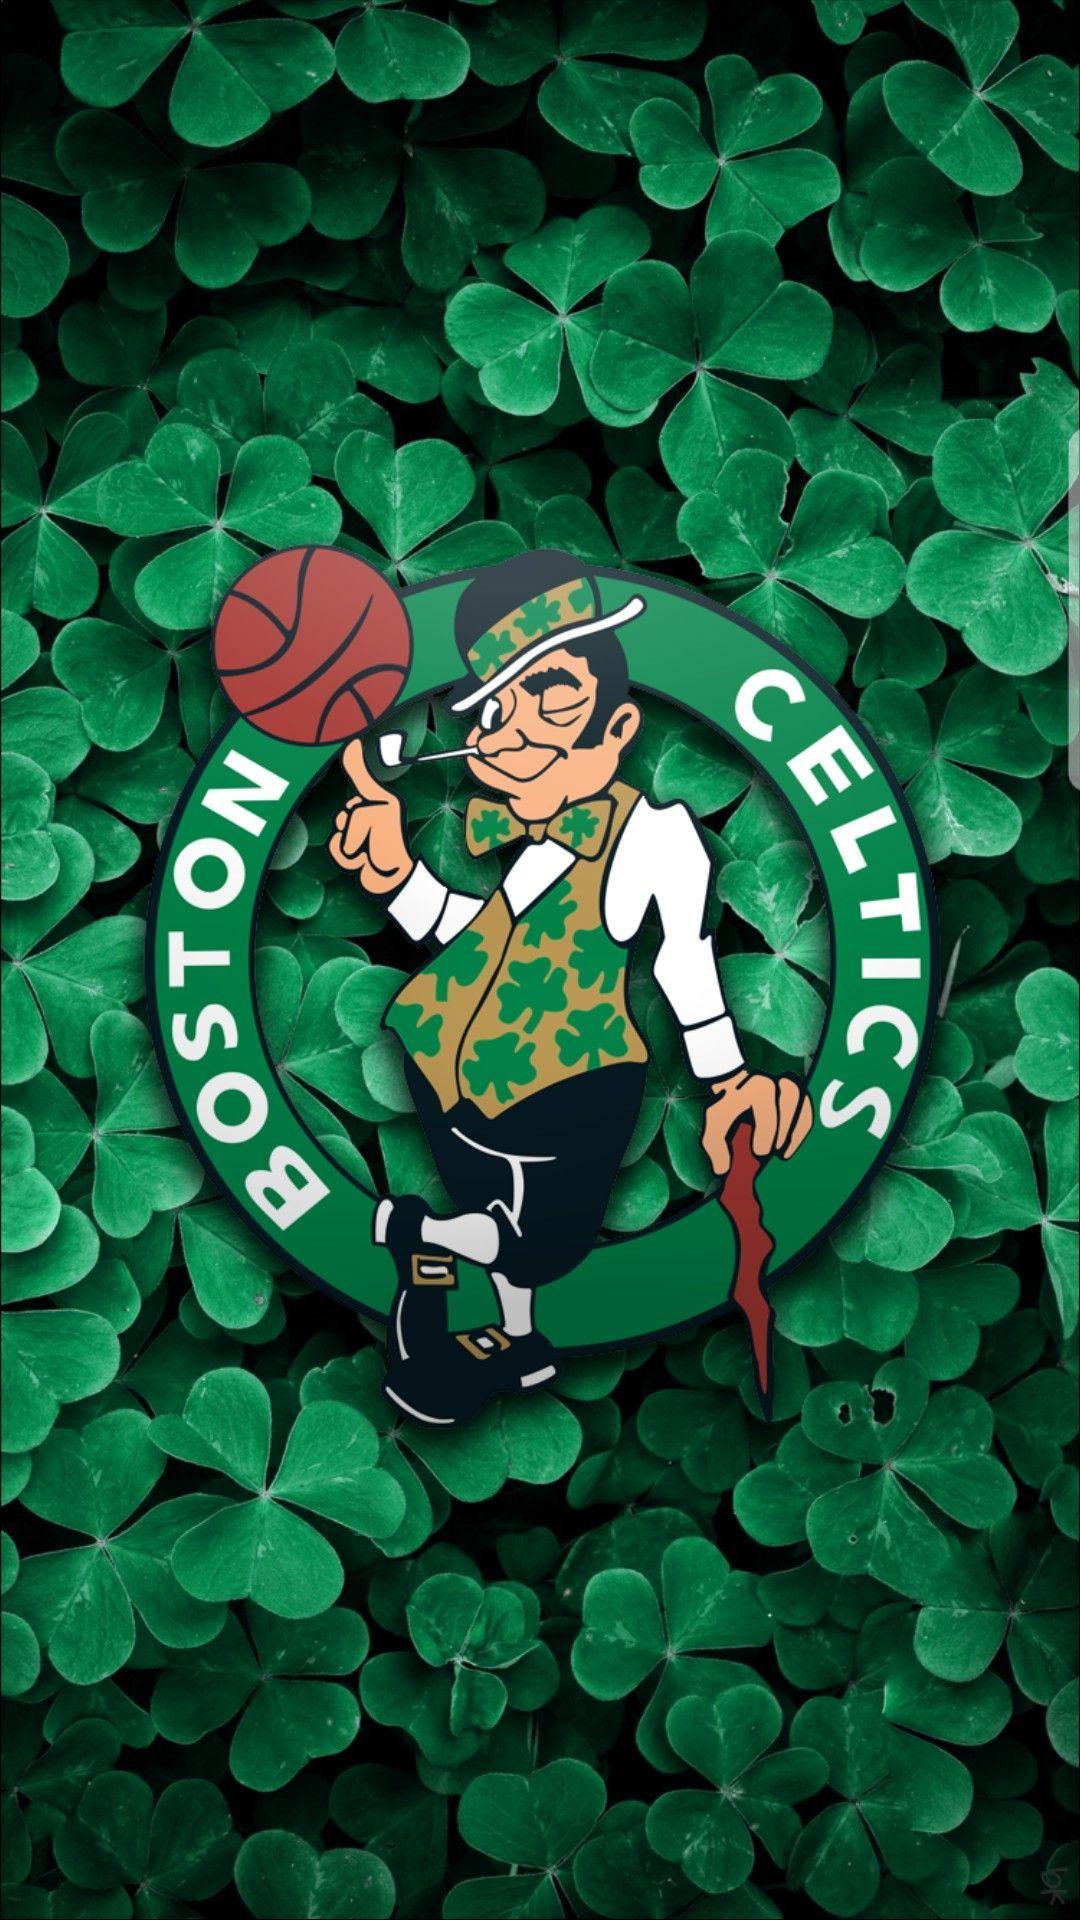 Celtics Logo Wallpapers Top Free Celtics Logo Backgrounds Wallpaperaccess celtics logo wallpapers top free